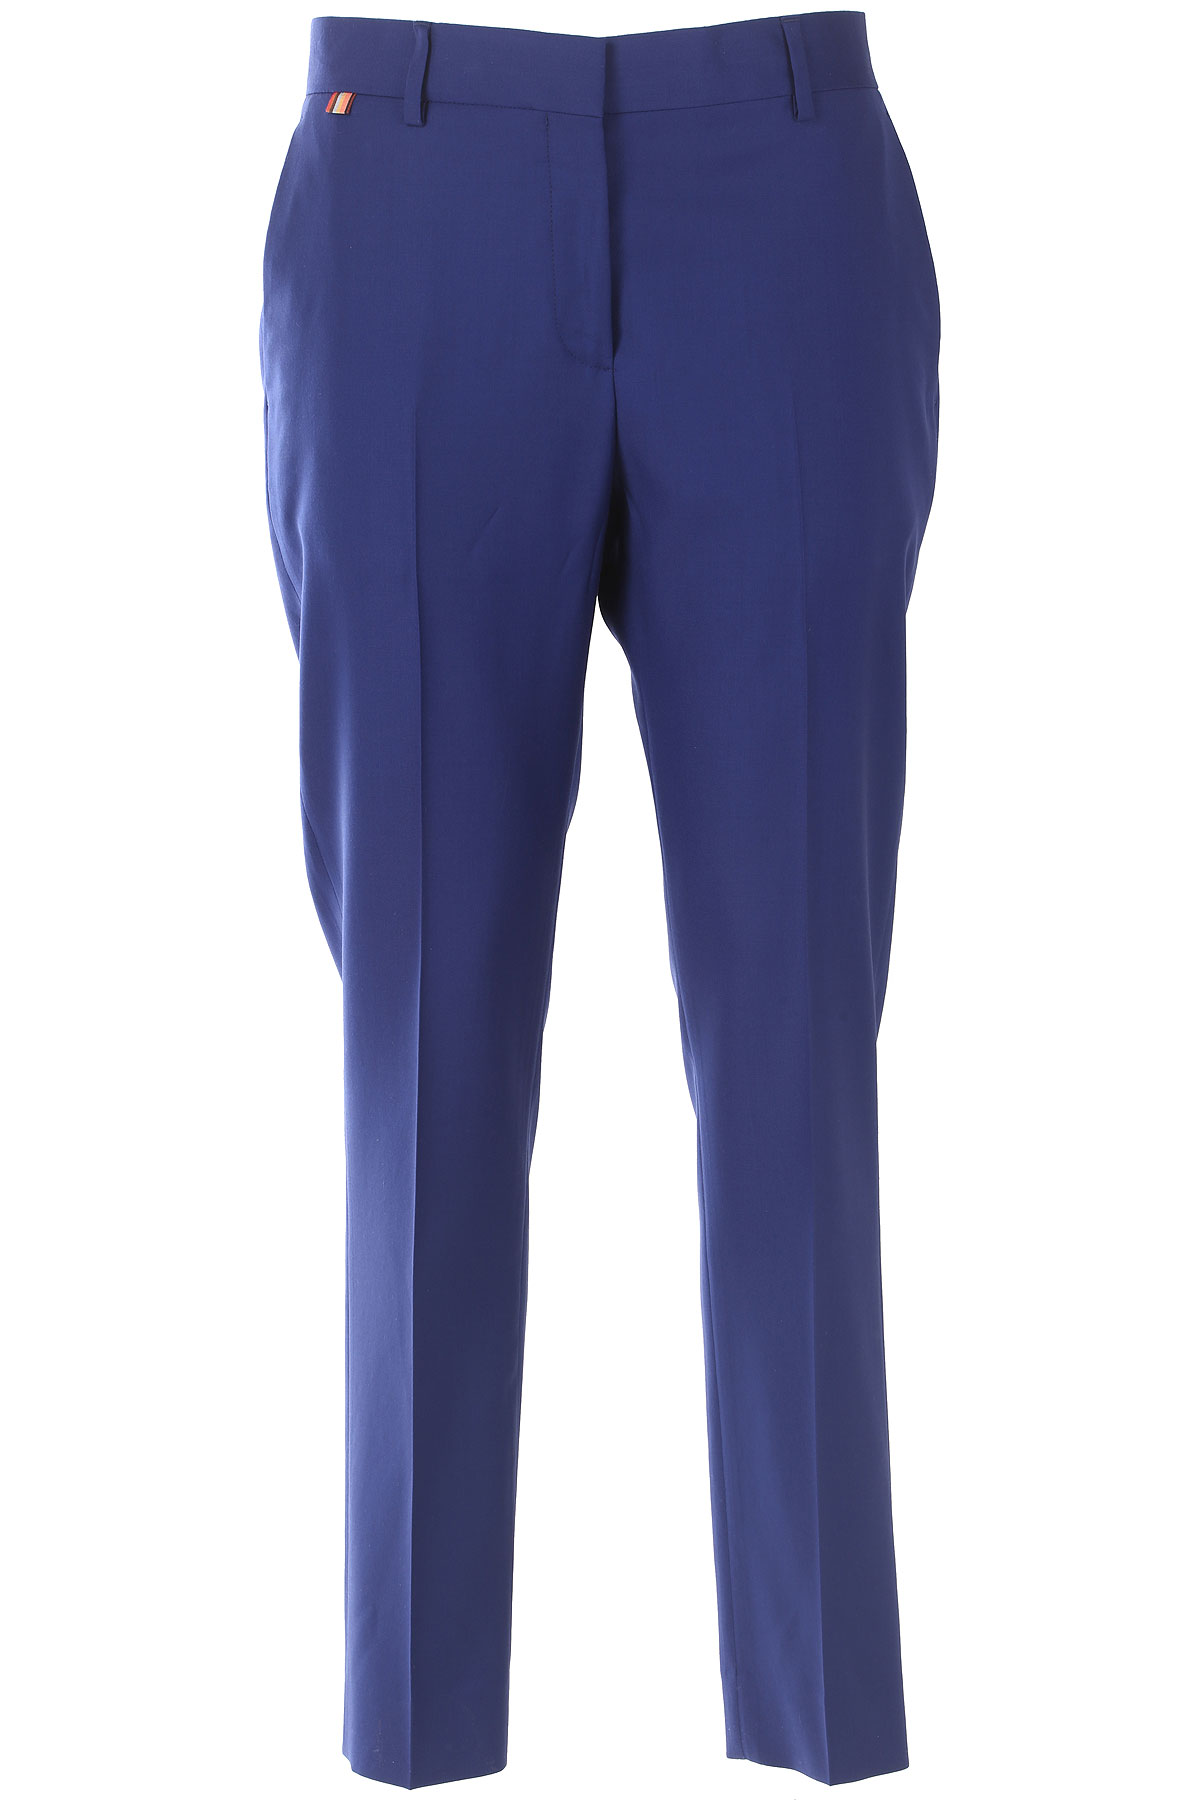 Paul Smith Pantalon Femme , Bleu, Coton, 2017, 40 44 46